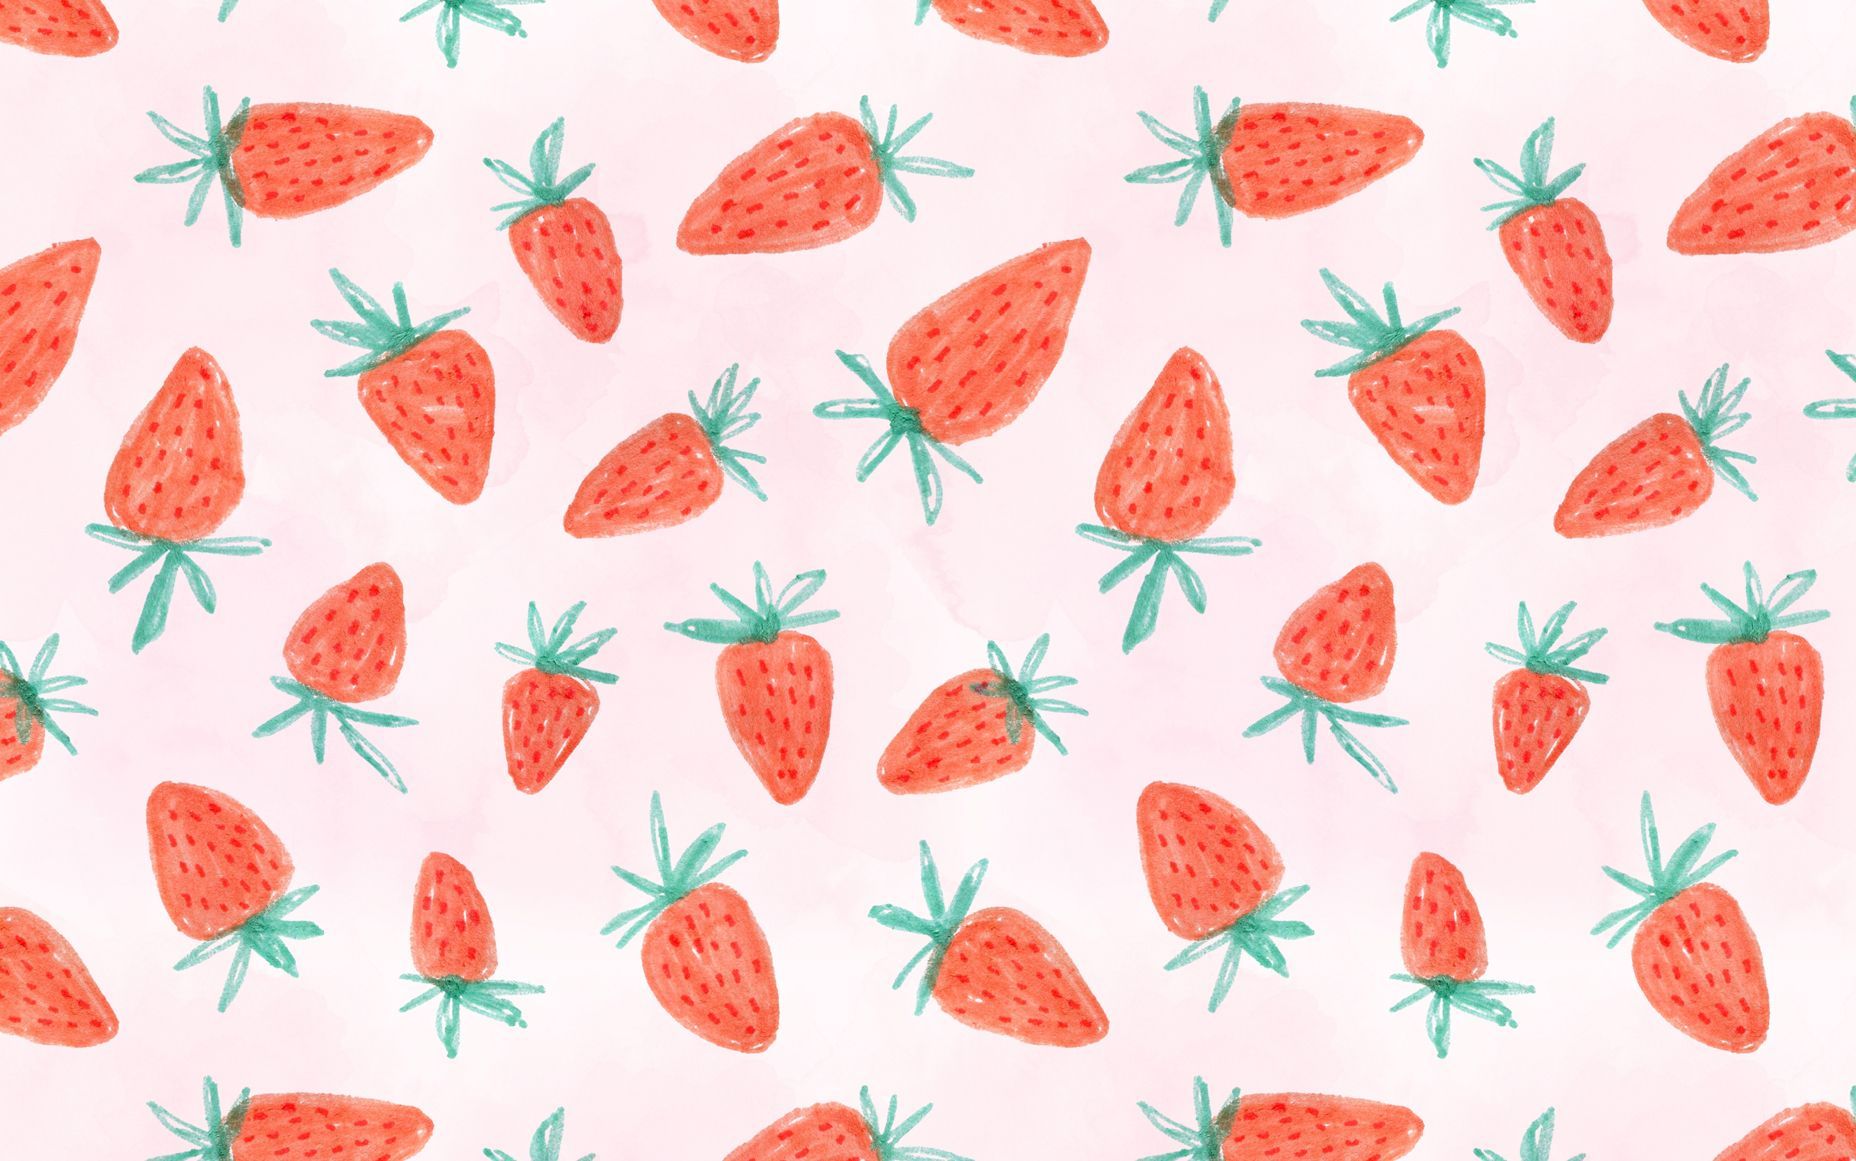 Strawberry Aesthetic Wallpaper Laptop